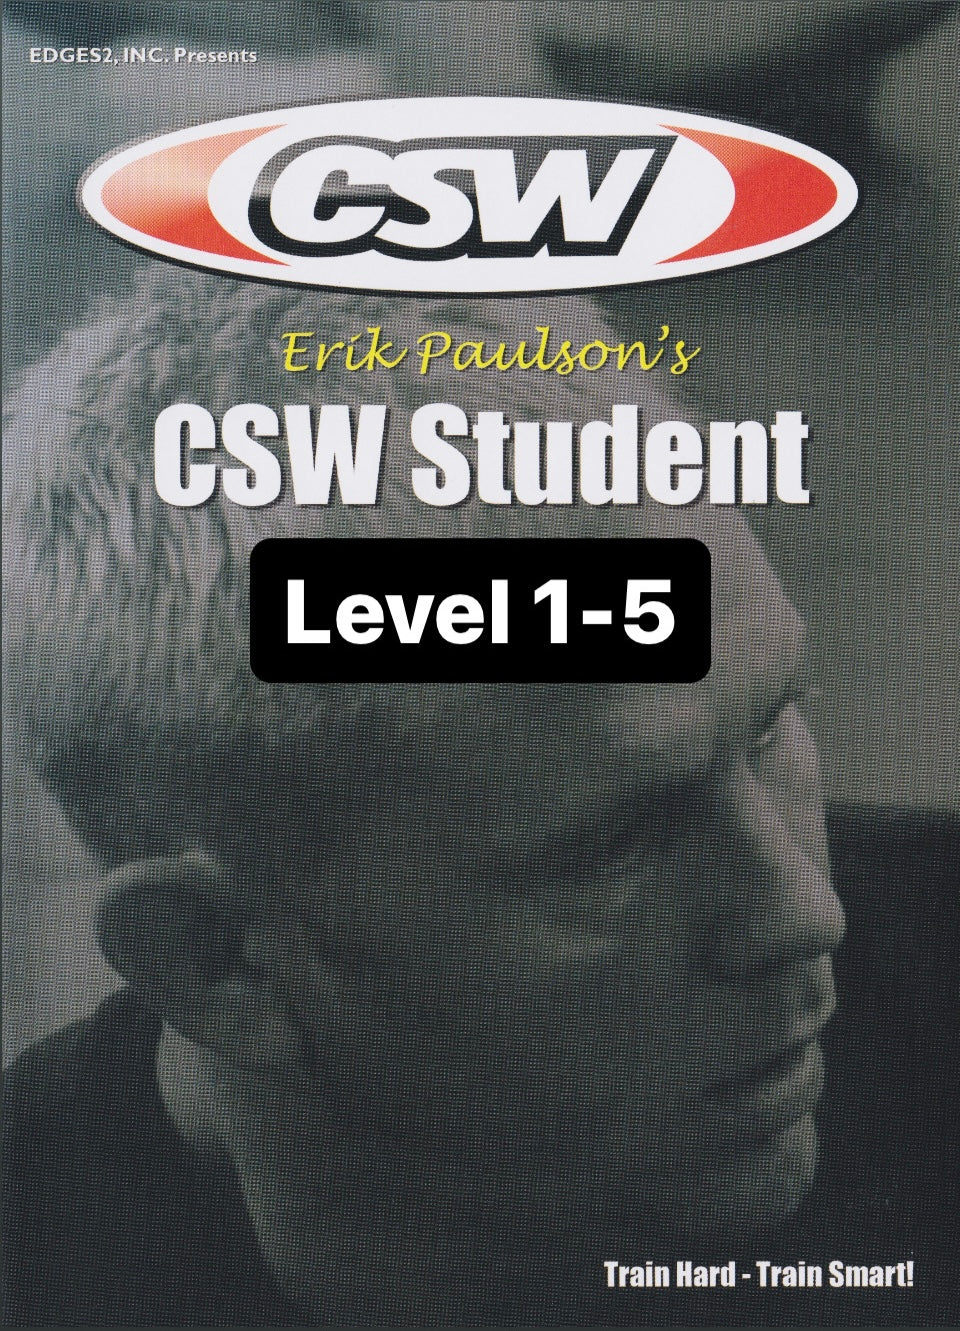 Erik Paulson CSW Student Level 1-5 DVD Set